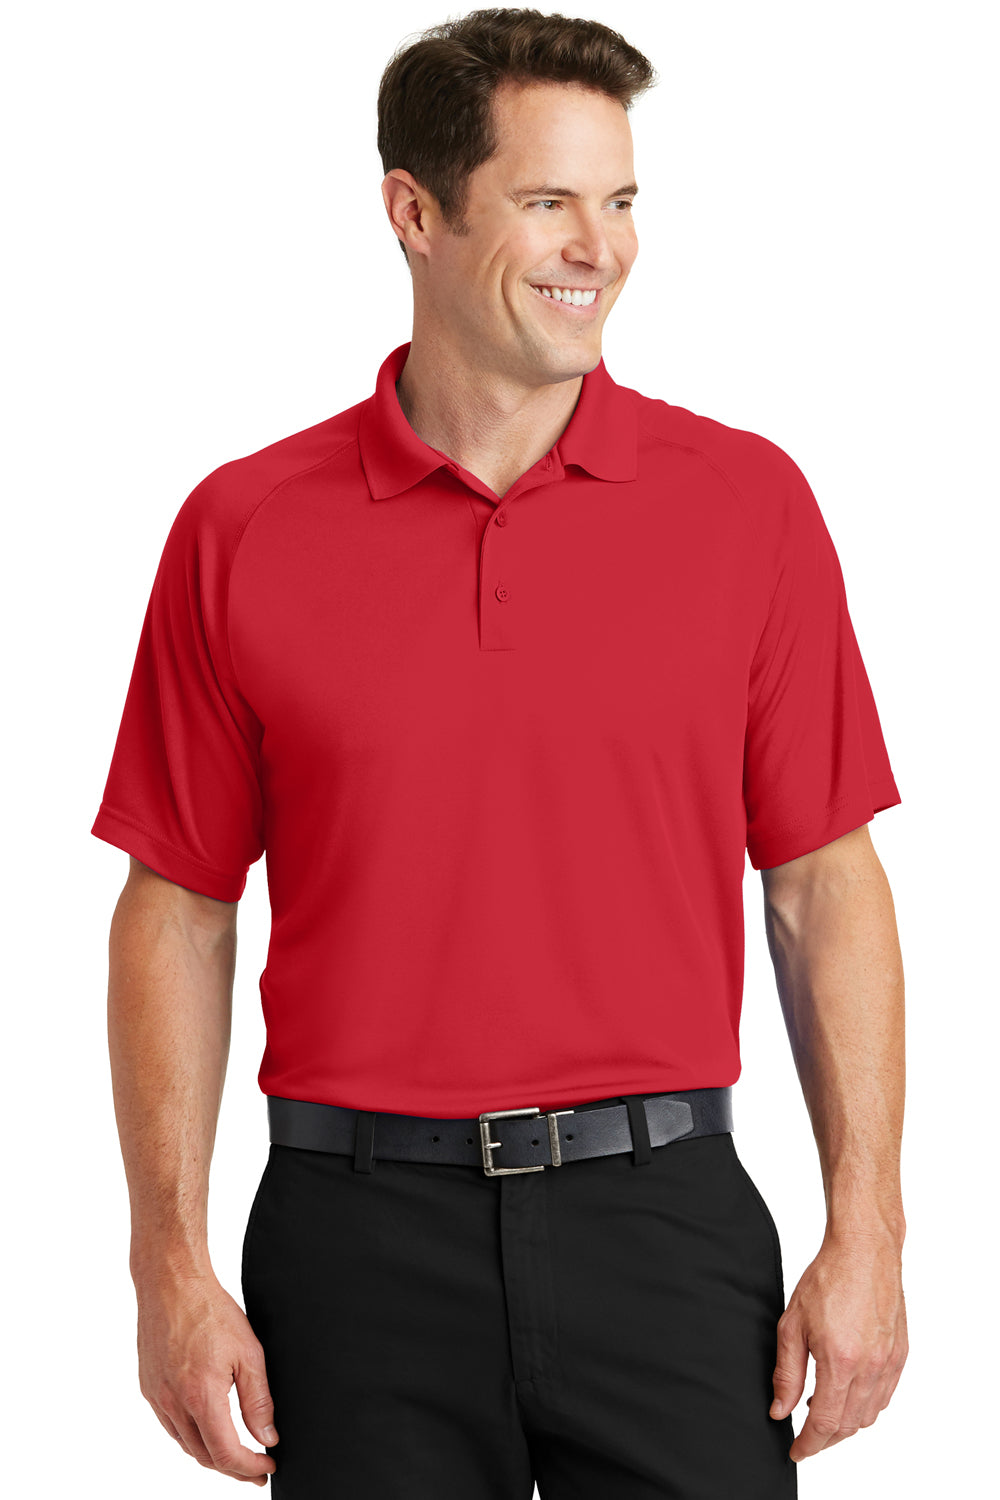 Sport-Tek T475 Mens Dry Zone Moisture Wicking Short Sleeve Polo Shirt Red Front